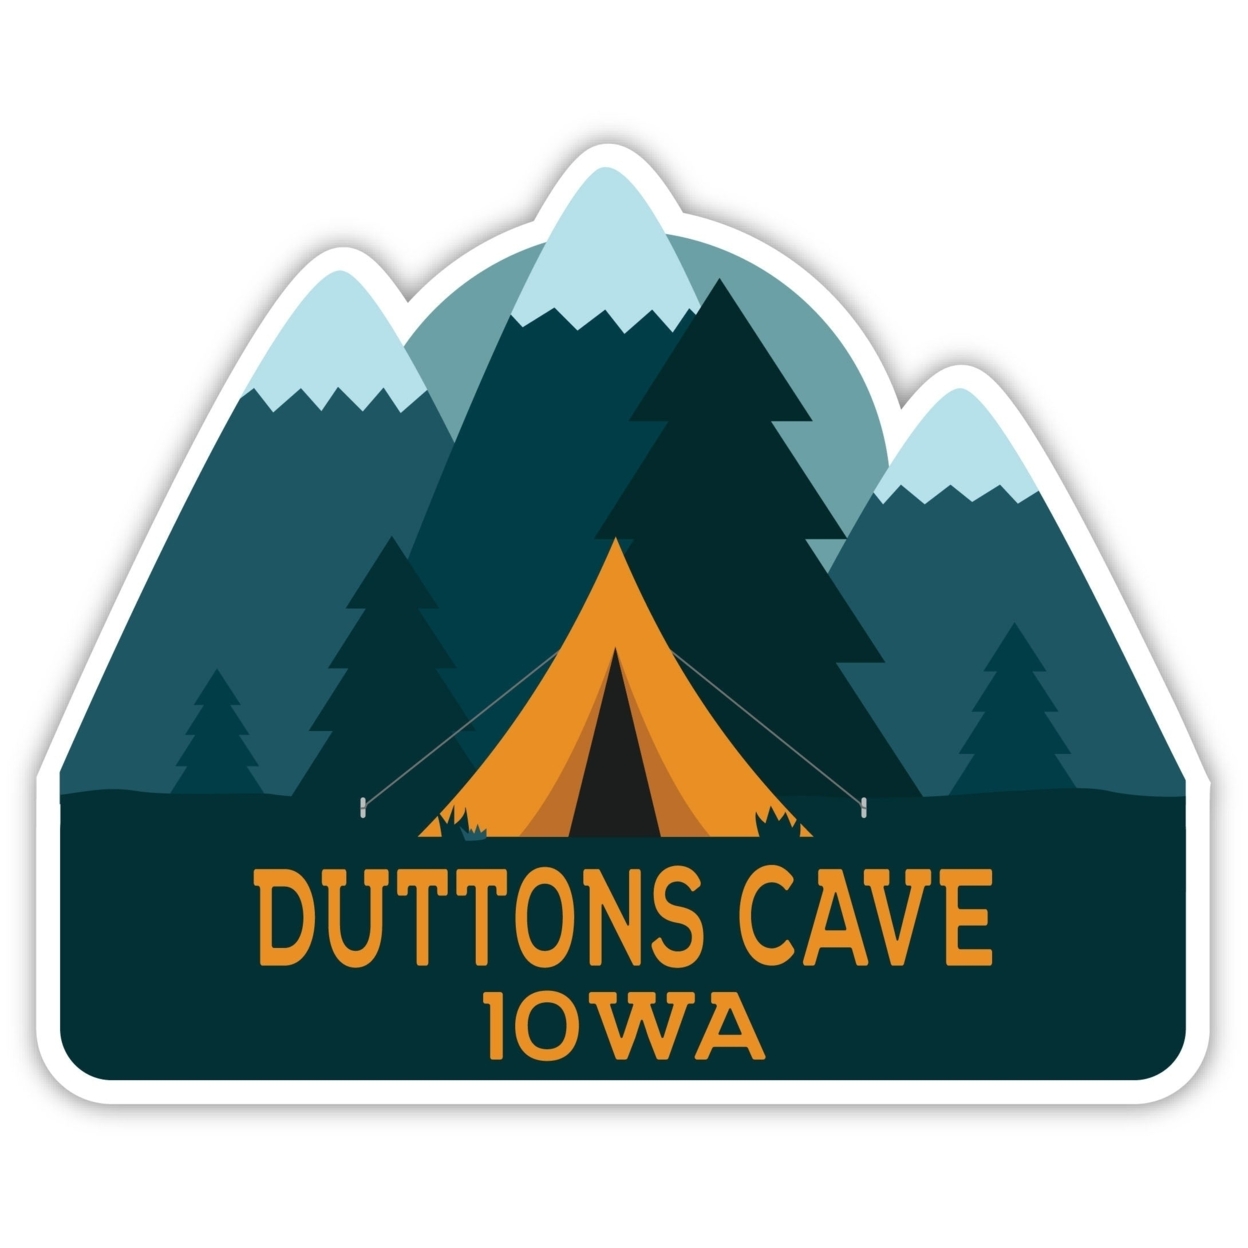 Duttons Cave Iowa Souvenir Decorative Stickers (Choose Theme And Size) - 4-Pack, 8-Inch, Tent